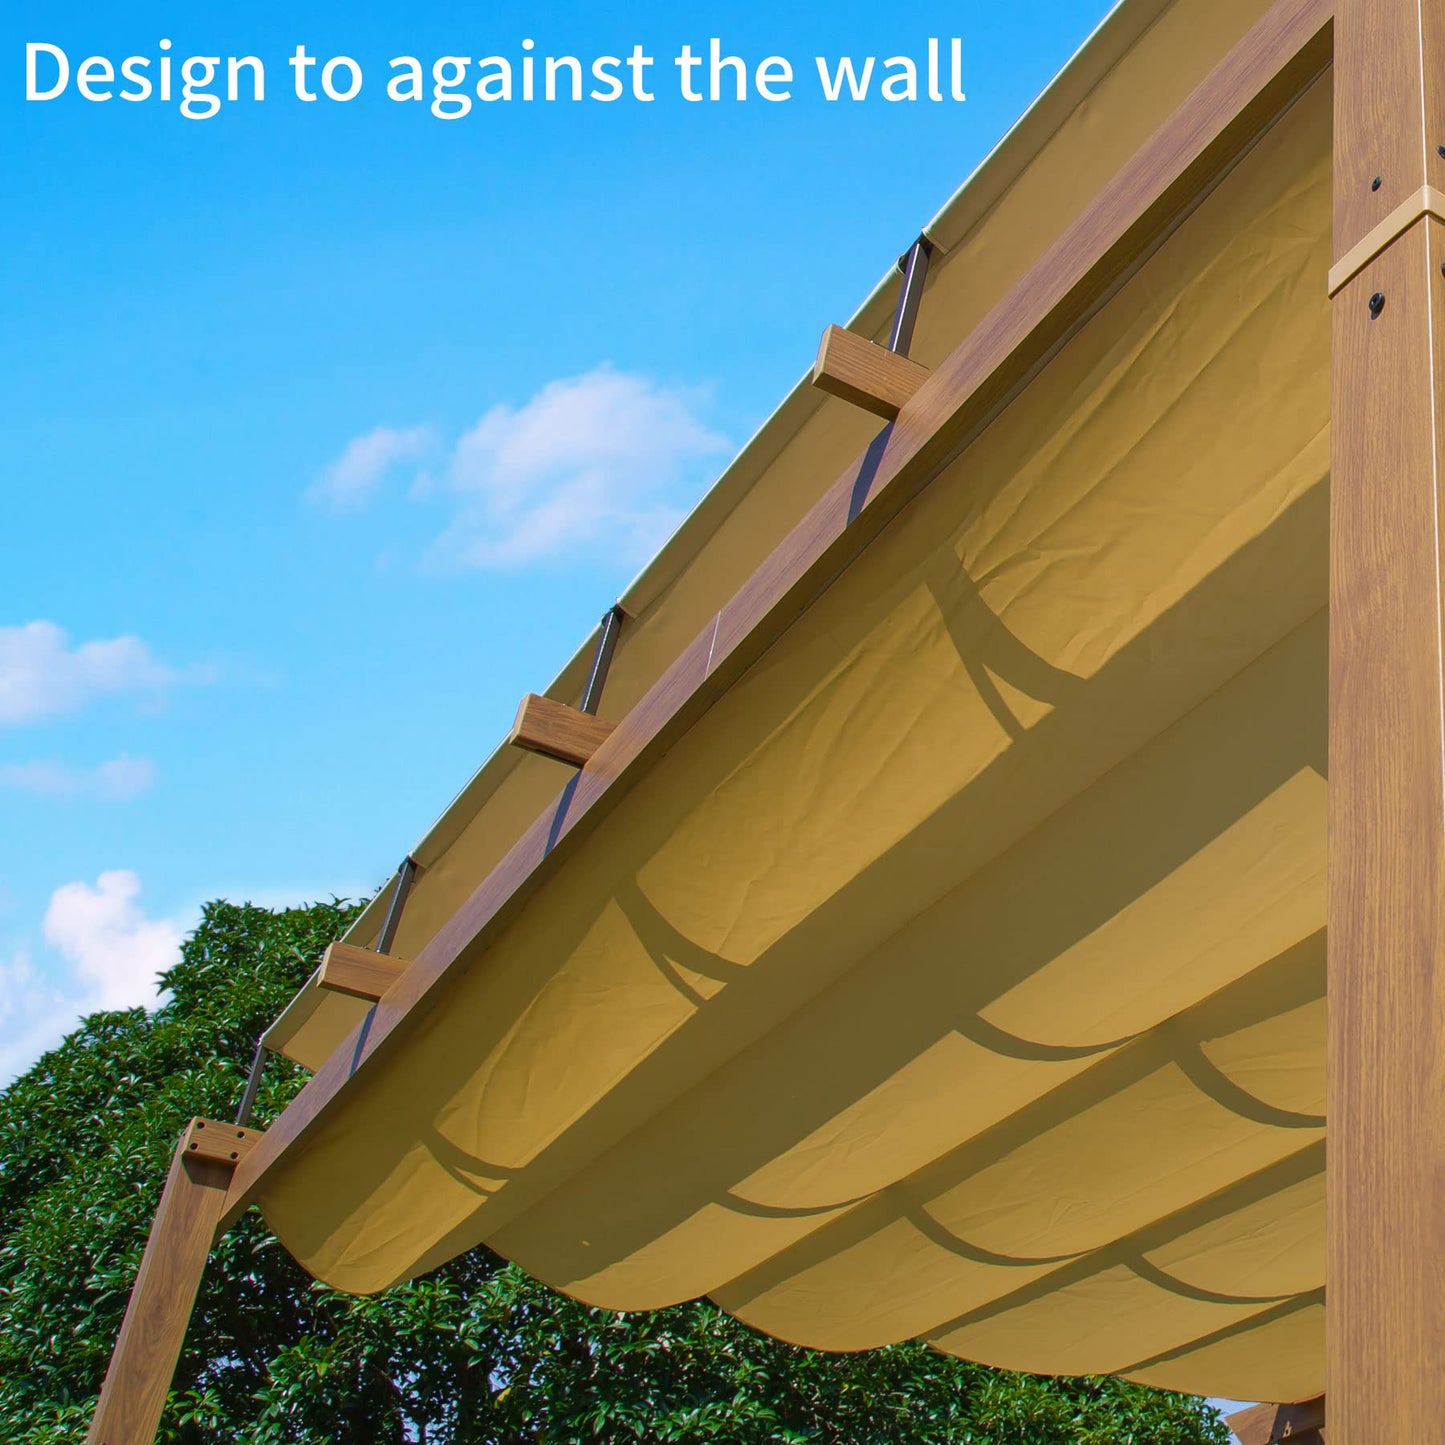 Domi Outdoor Living Outdoor Retractable Pergola with Weather-Resistant Canopy Aluminum